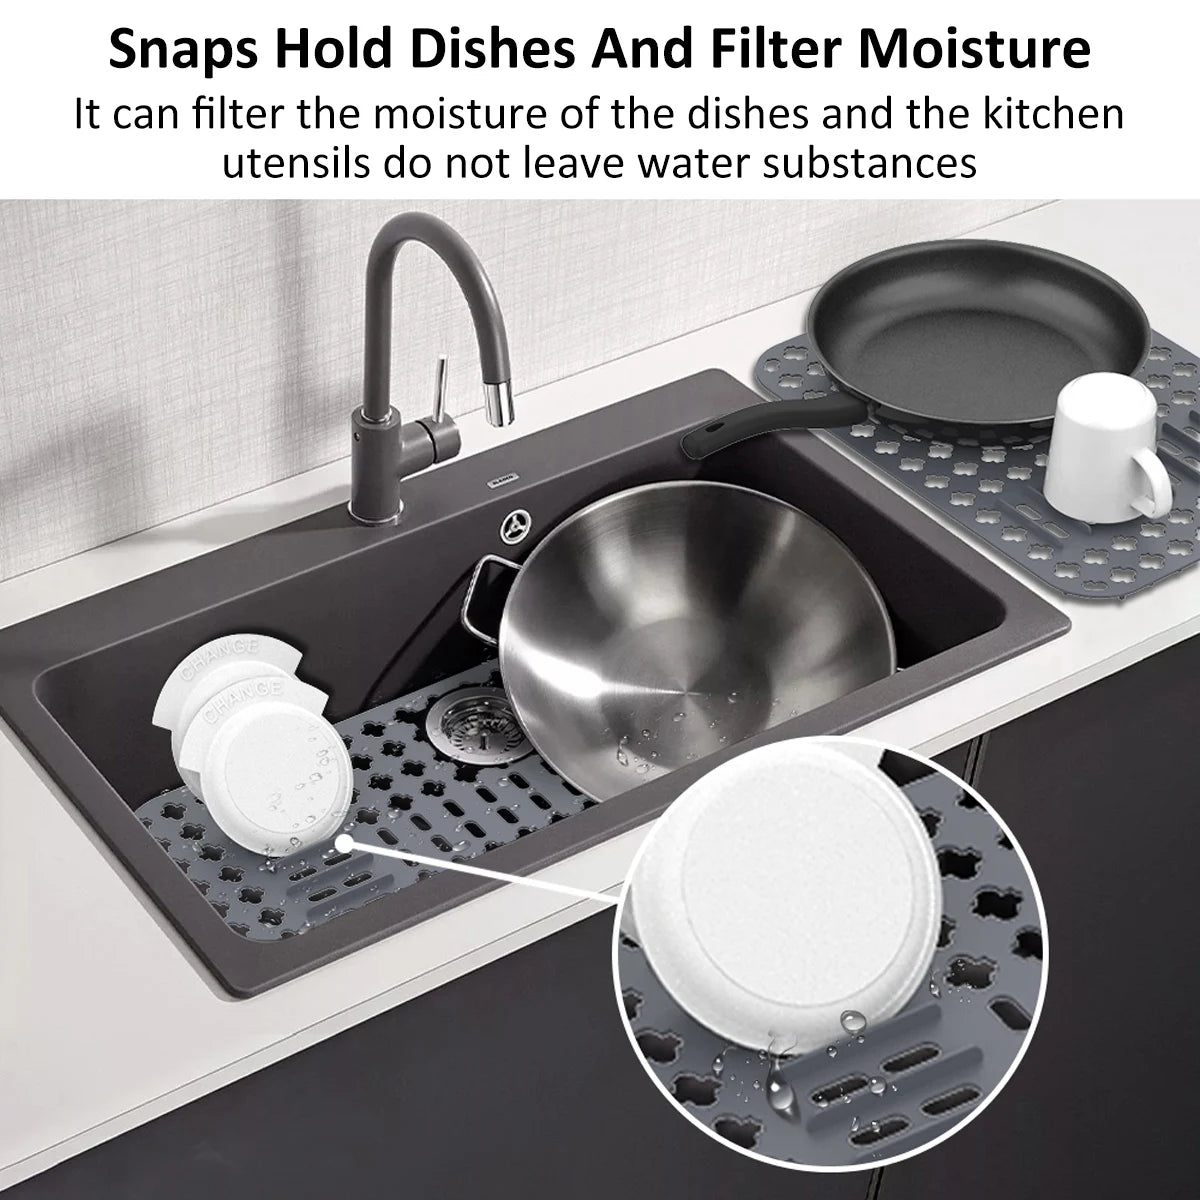 Silicone Sink Protector Non-Slip Dish Mat